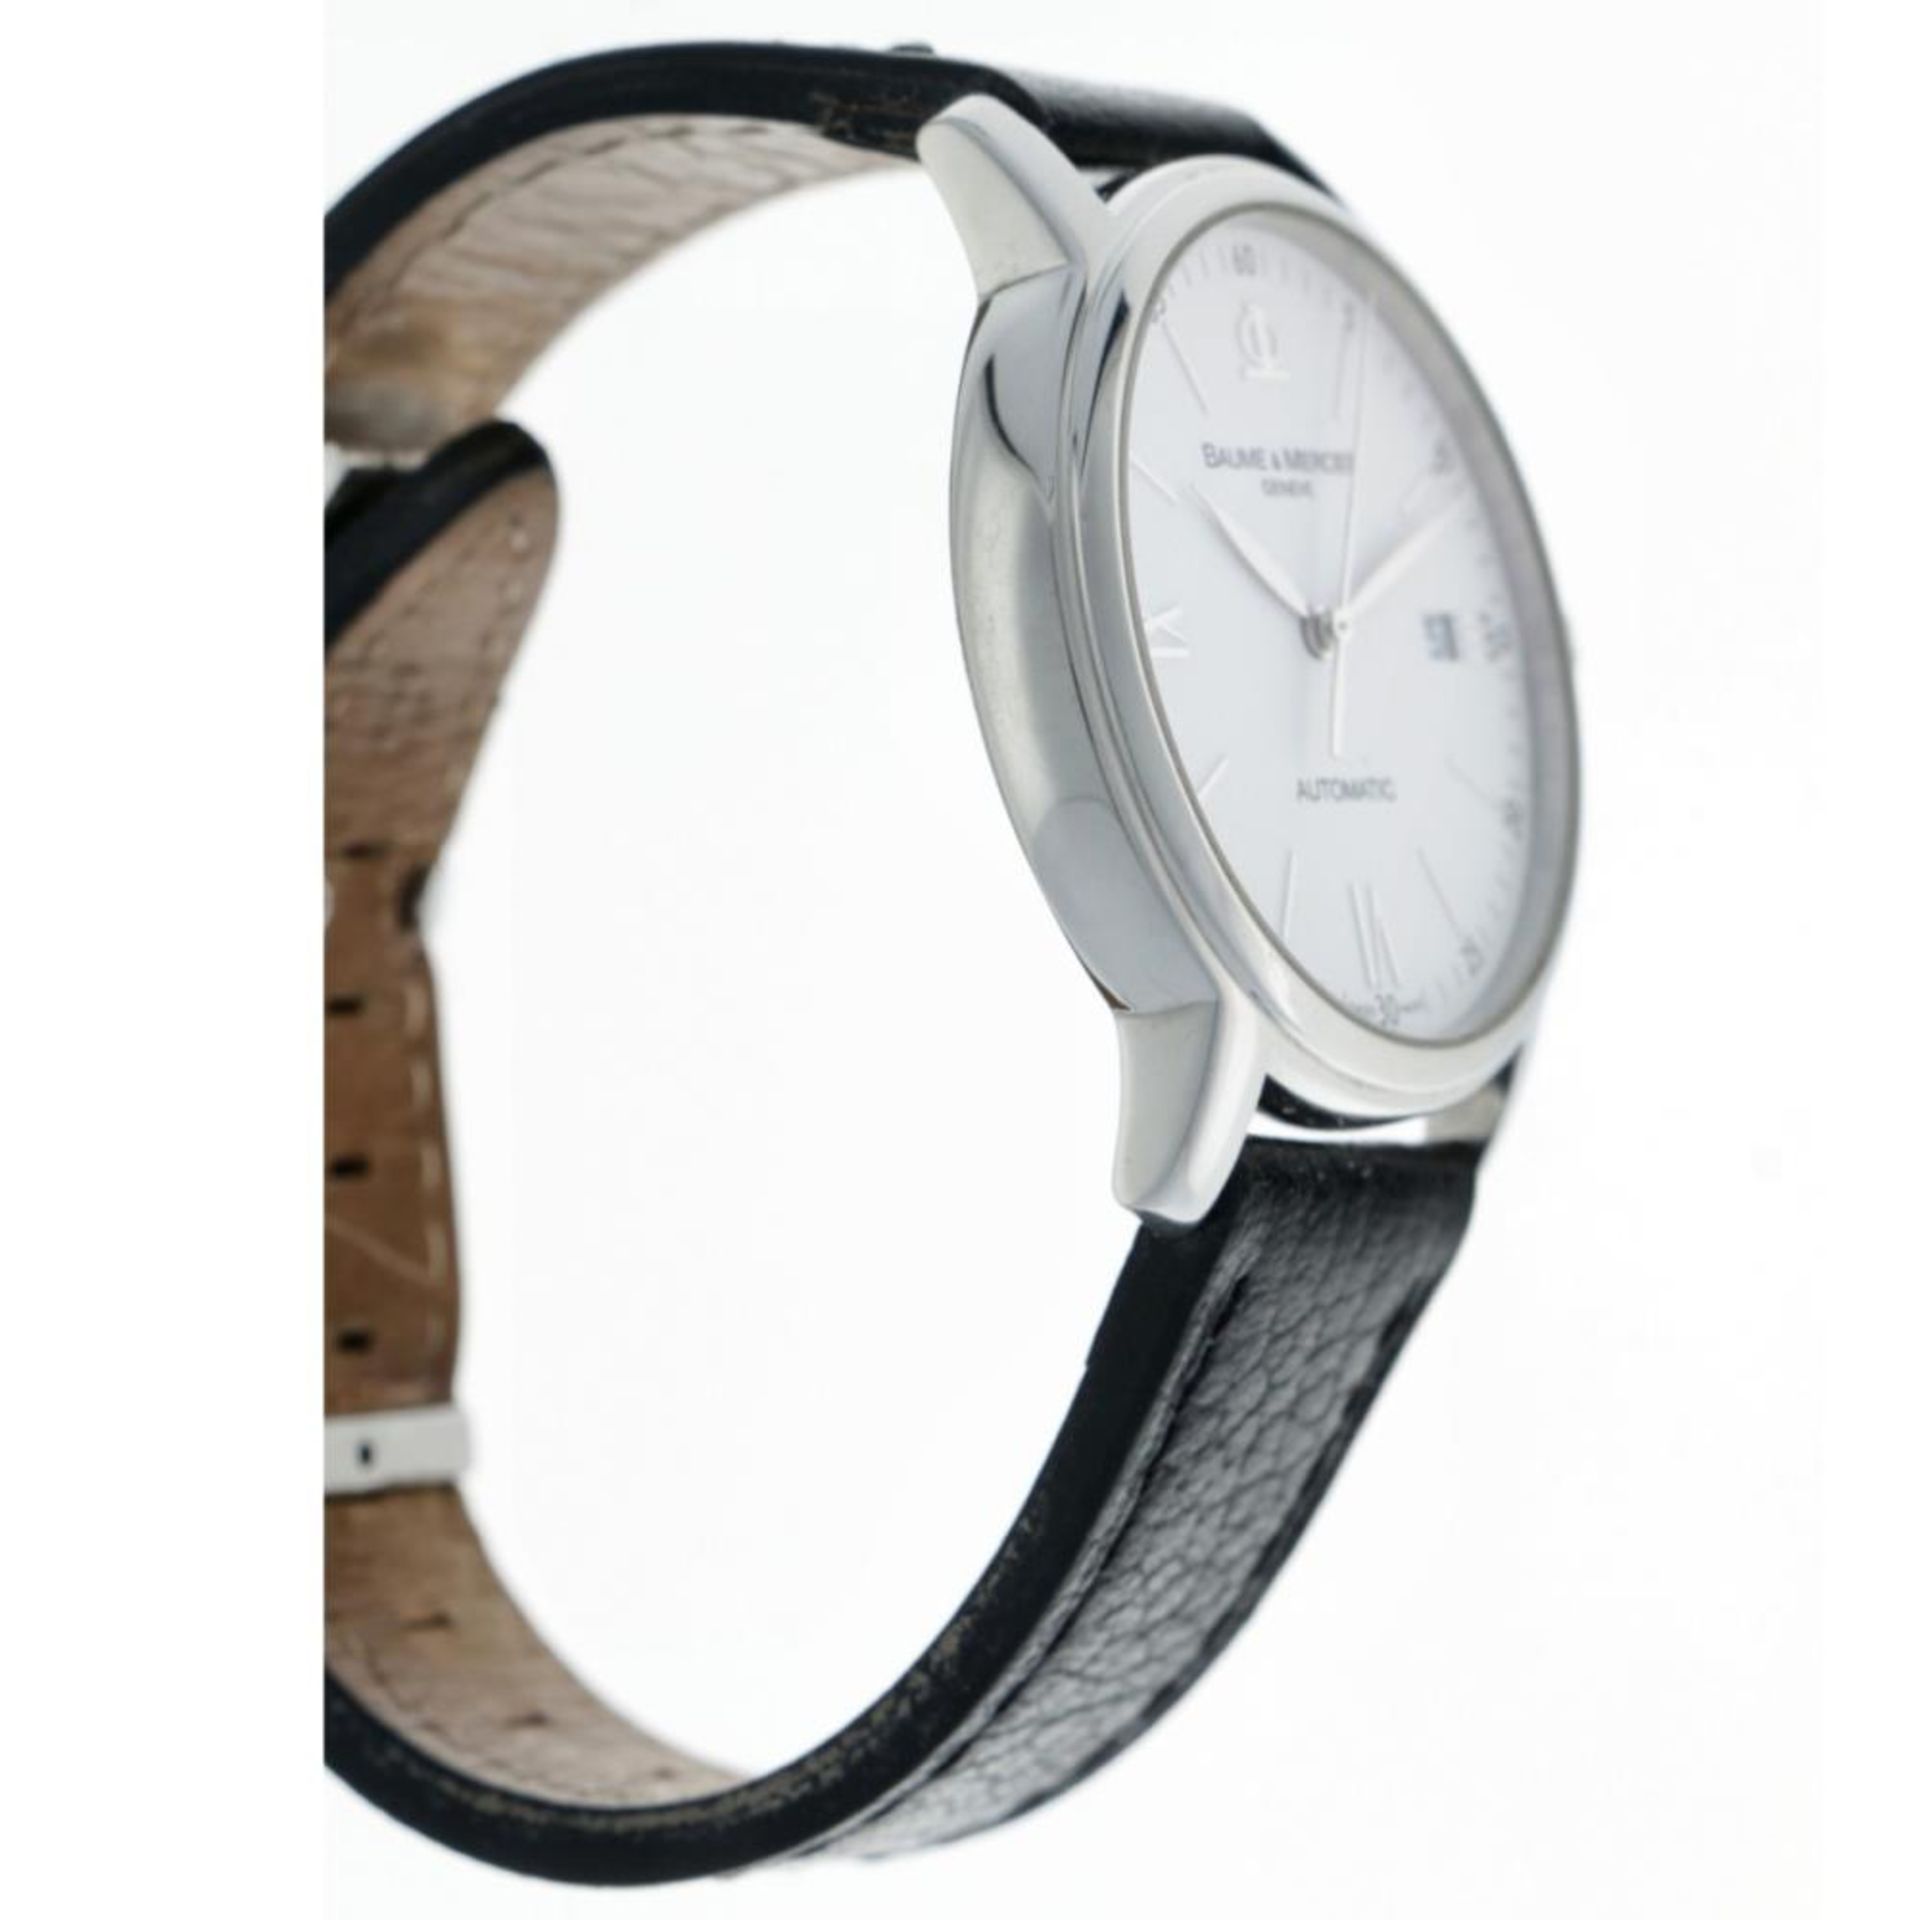 Baume & Mercier Classima 65554 - Men's watch - approx. 2010. - Image 7 of 10